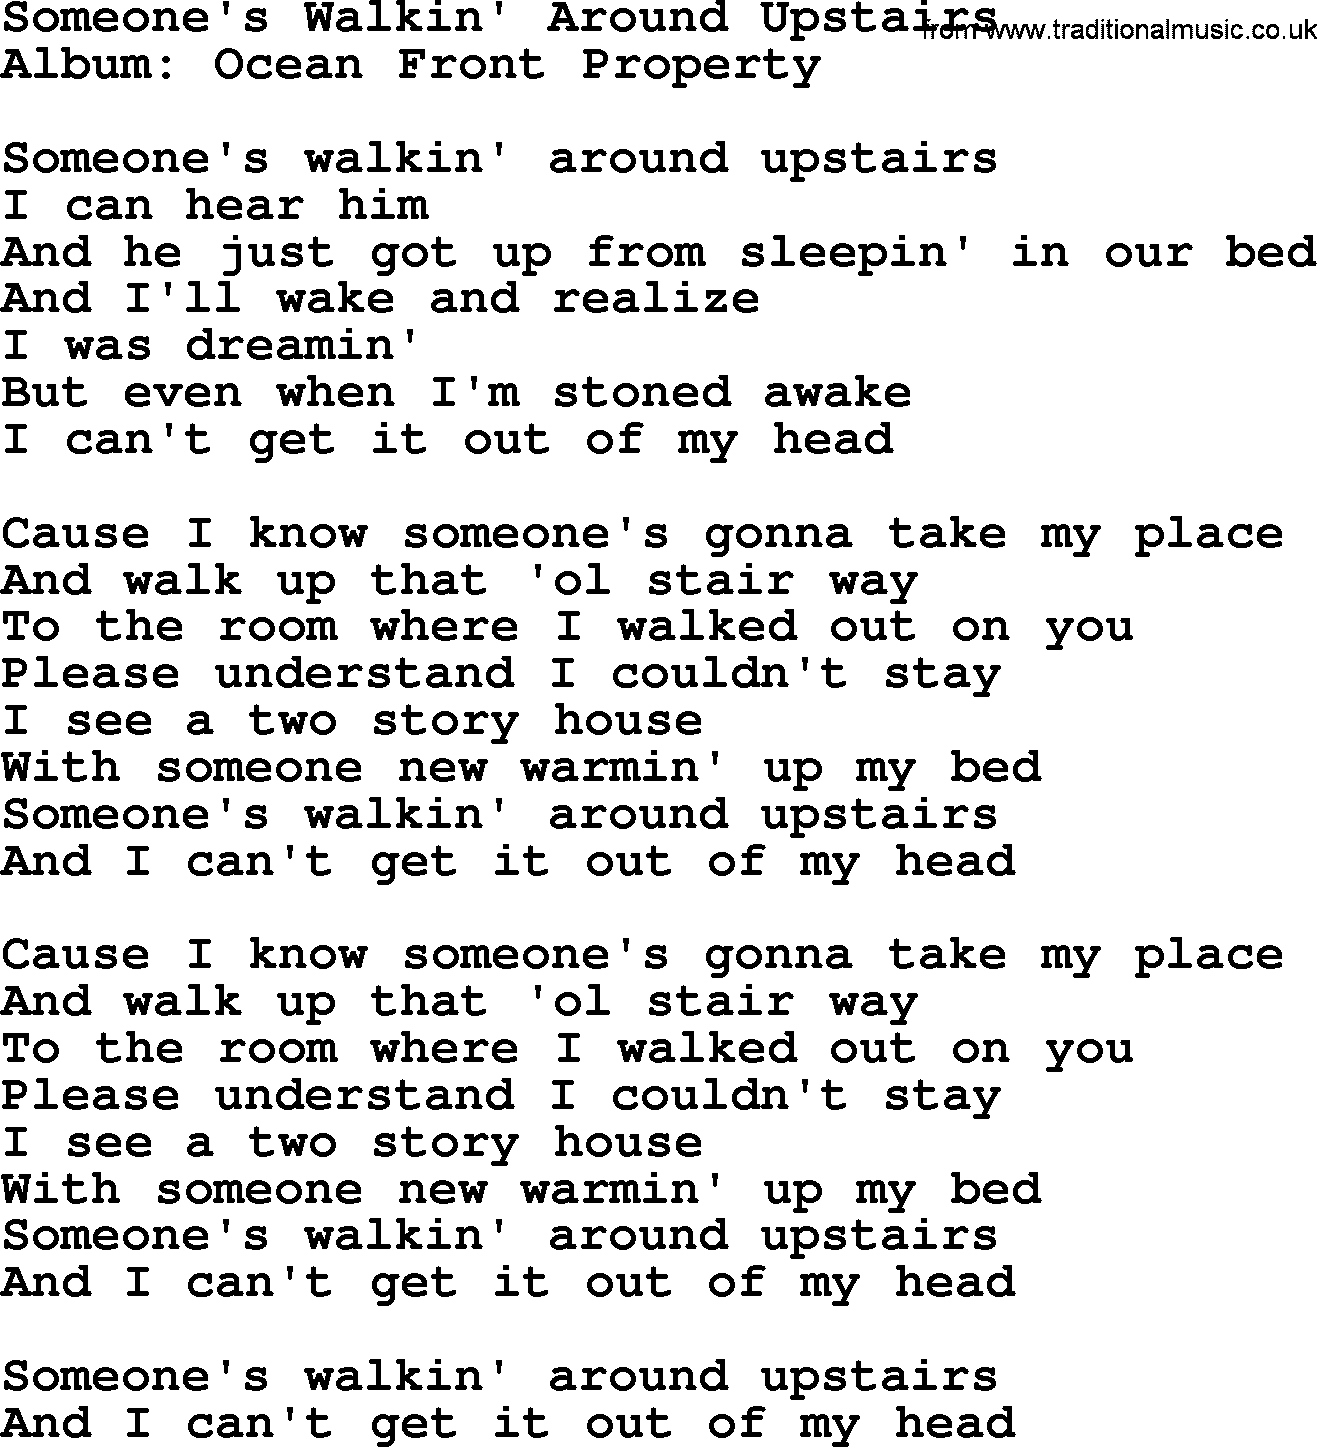 George Strait song: Someone's Walkin' Around Upstairs, lyrics